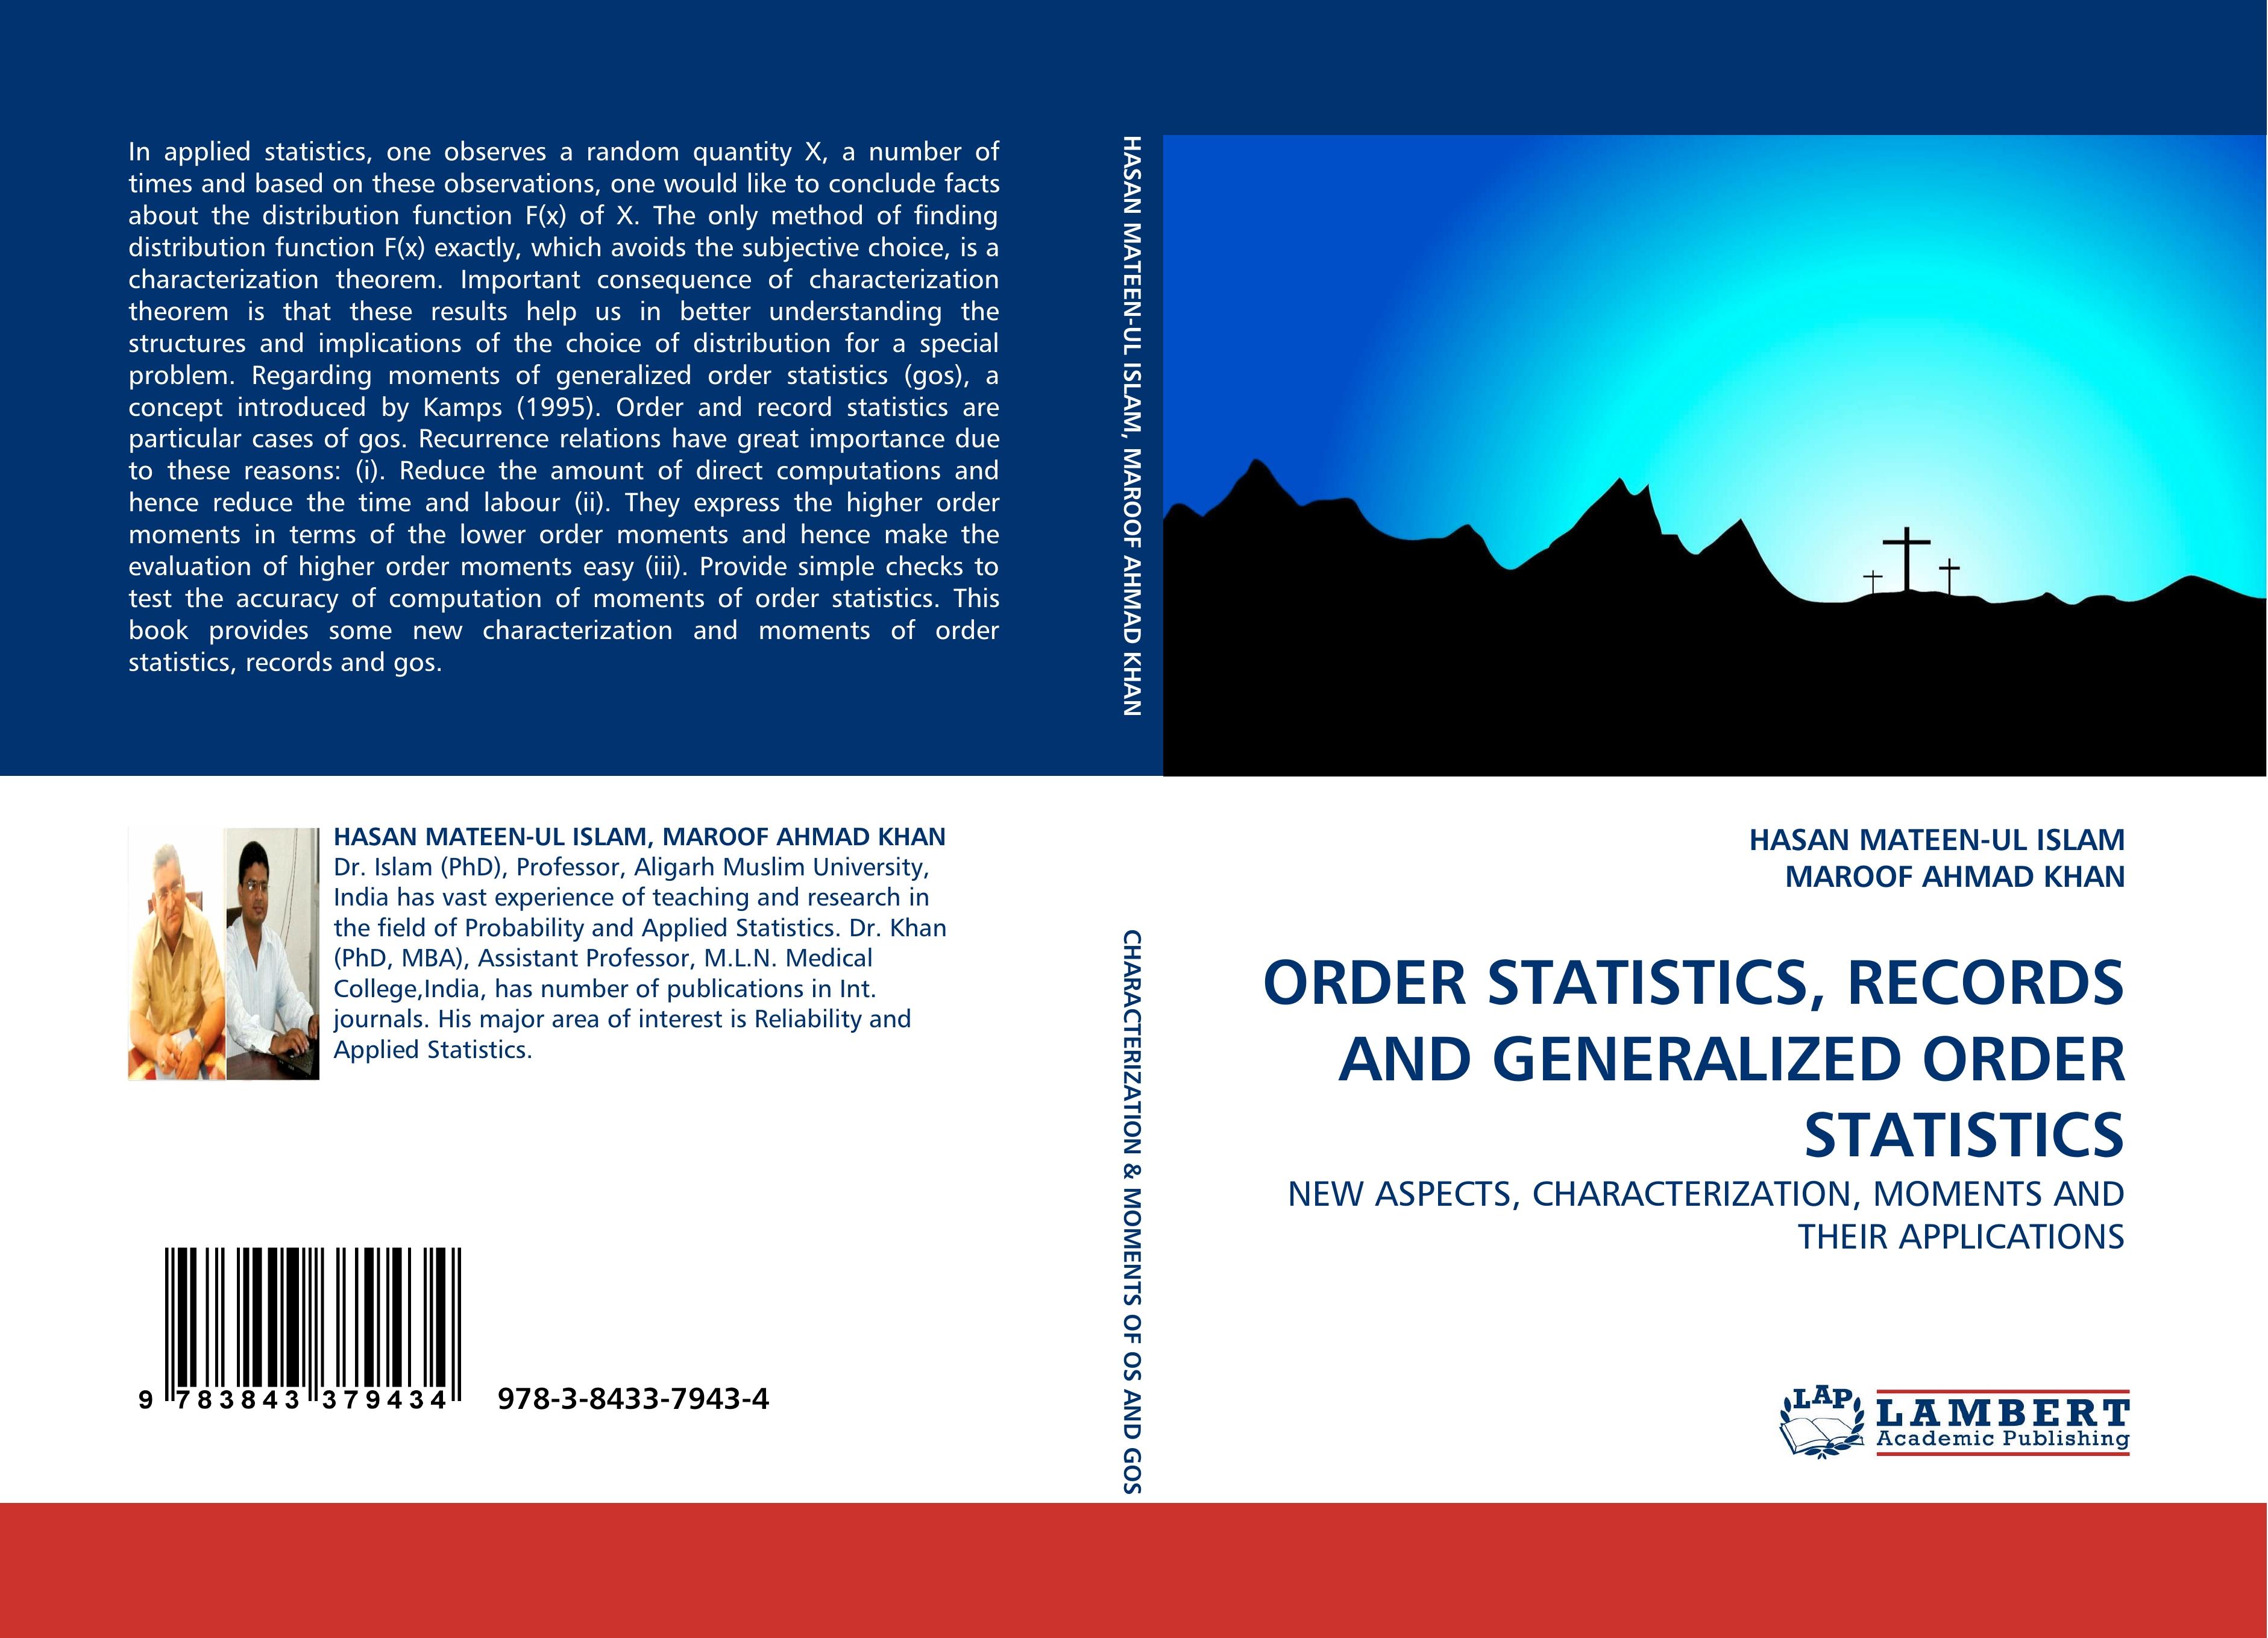 ORDER STATISTICS, RECORDS AND GENERALIZED ORDER STATISTICS - HASAN MATEEN-UL ISLAM MAROOF AHMAD KHAN